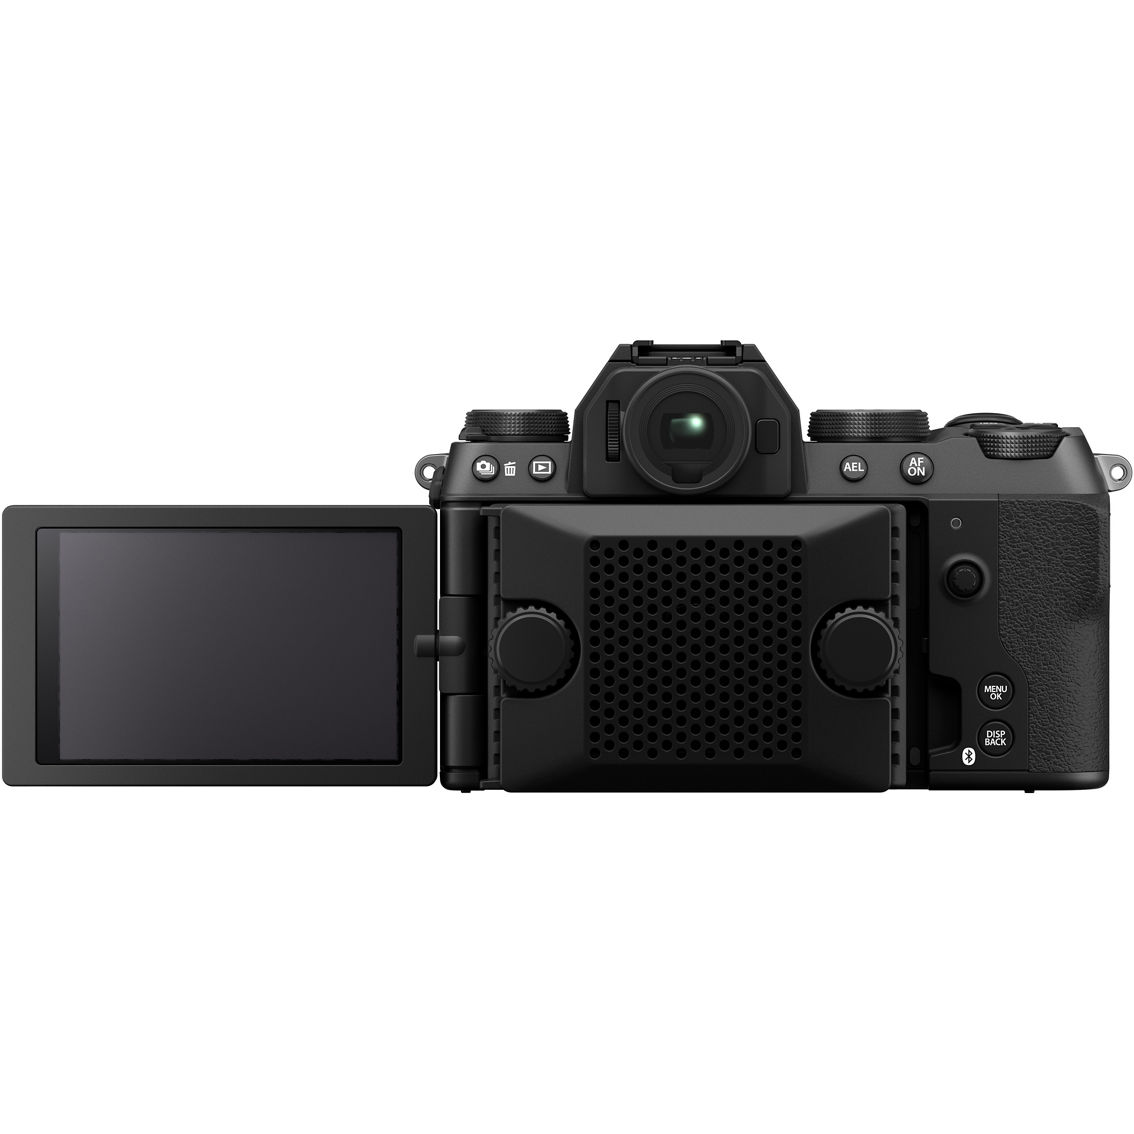 Fujifilm XS20 Mirrorless Camera Body, Black - Image 7 of 8